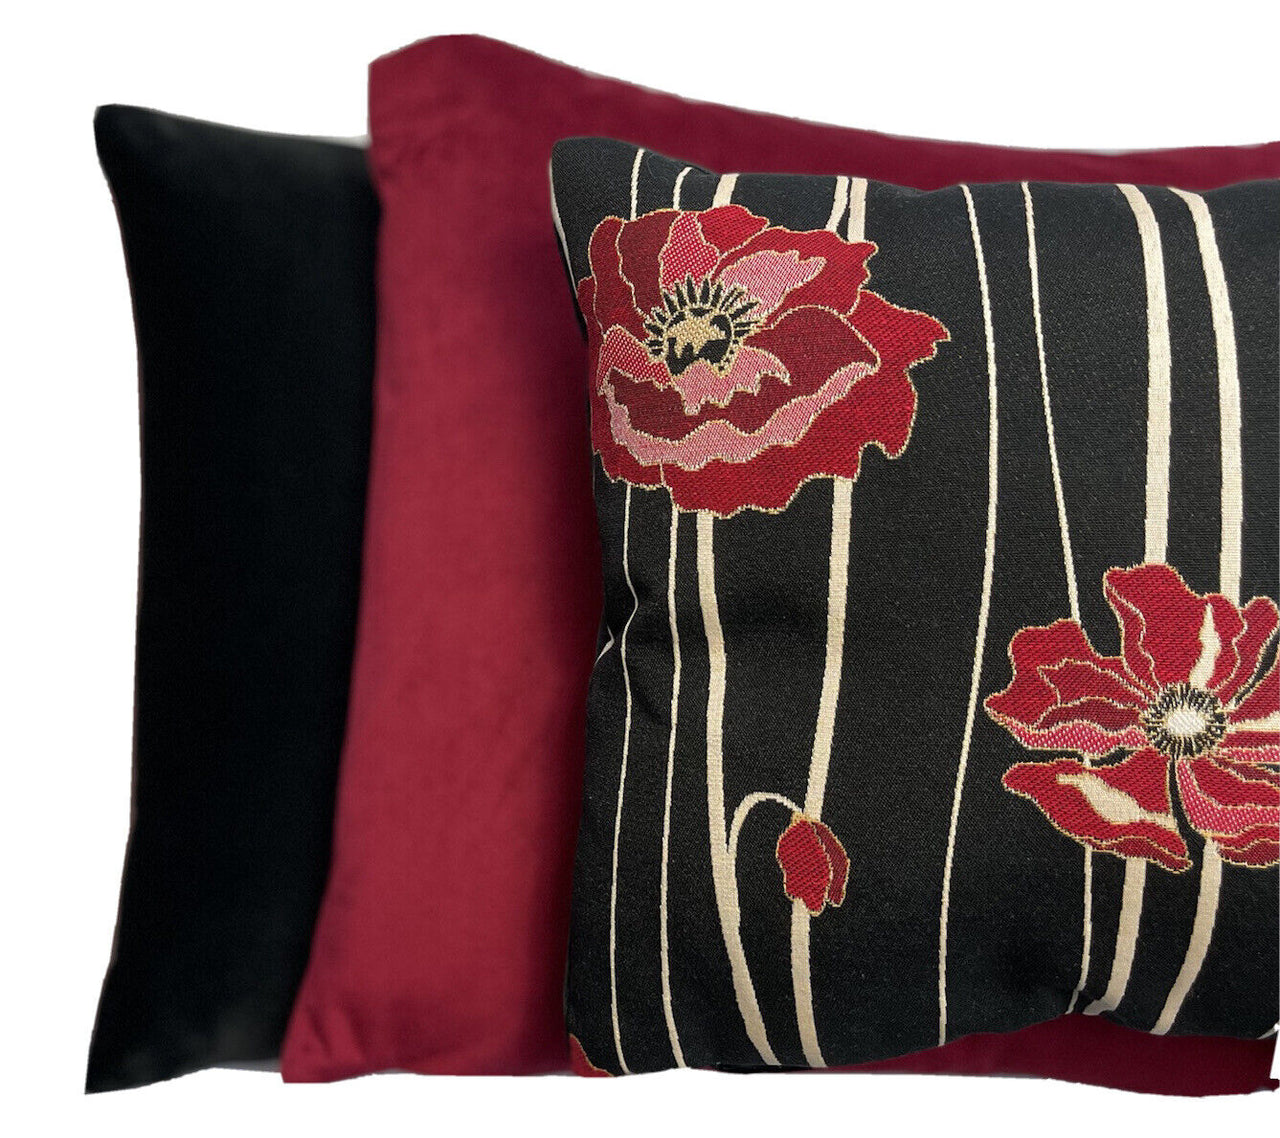 Red Poppy Stripes Cushion Cover Black Woven Throw Pillow Botanica Pinkl Garden